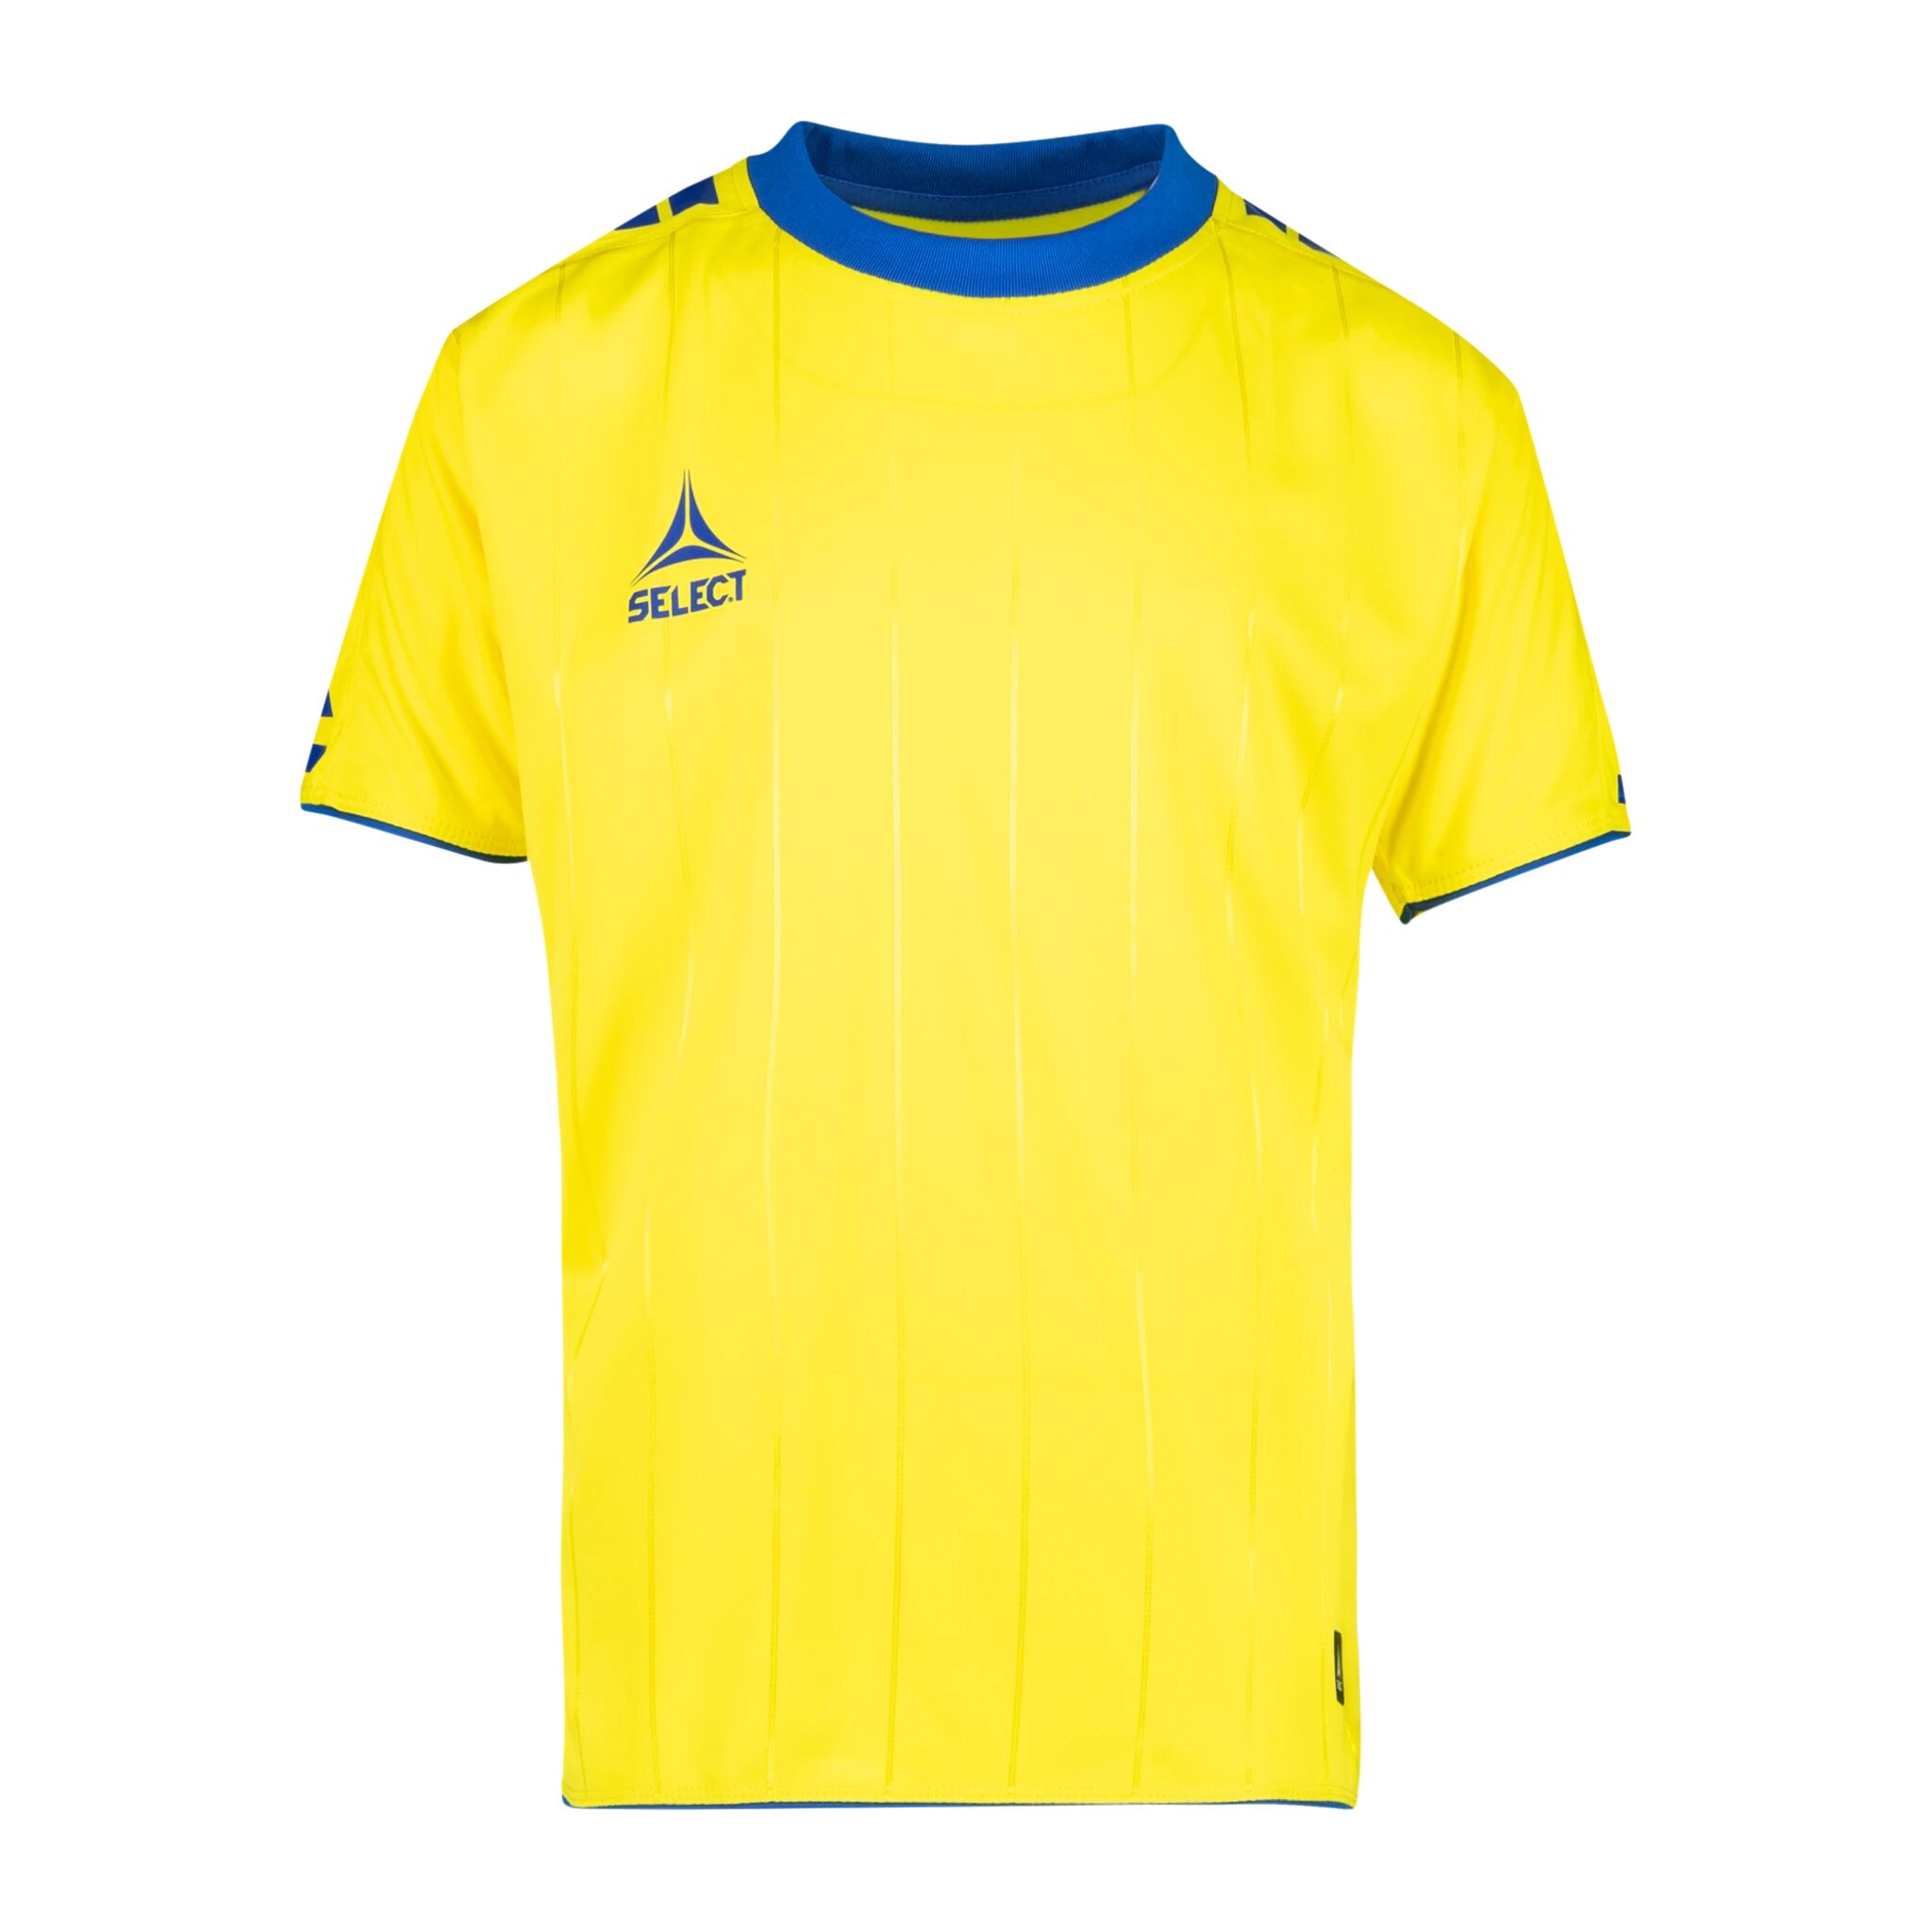 Select Player shirt S/S Argentina, fotballtrøye senior 140 Yellow/Blue